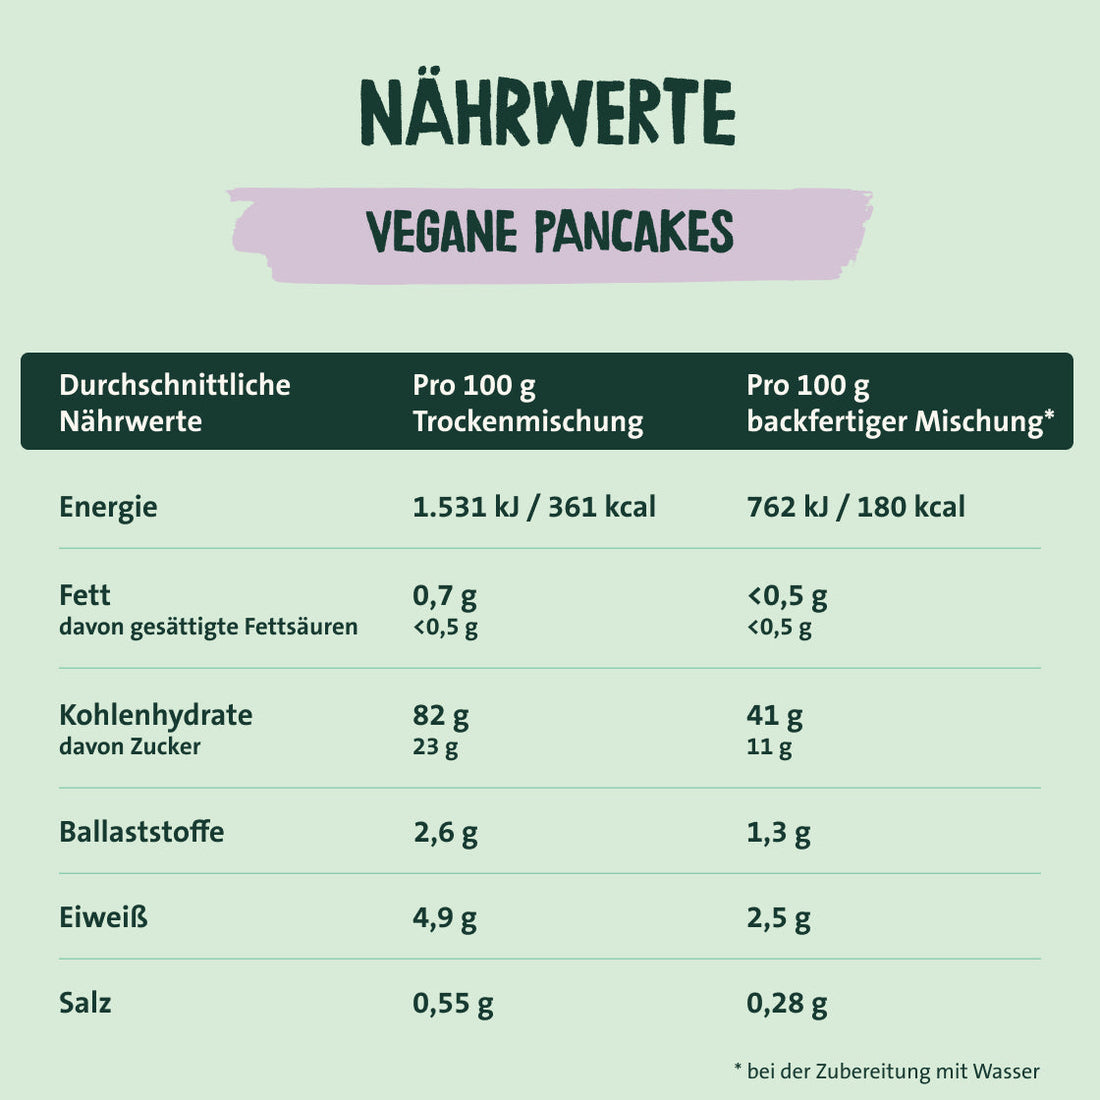 Nährwerte vegane Pancakes